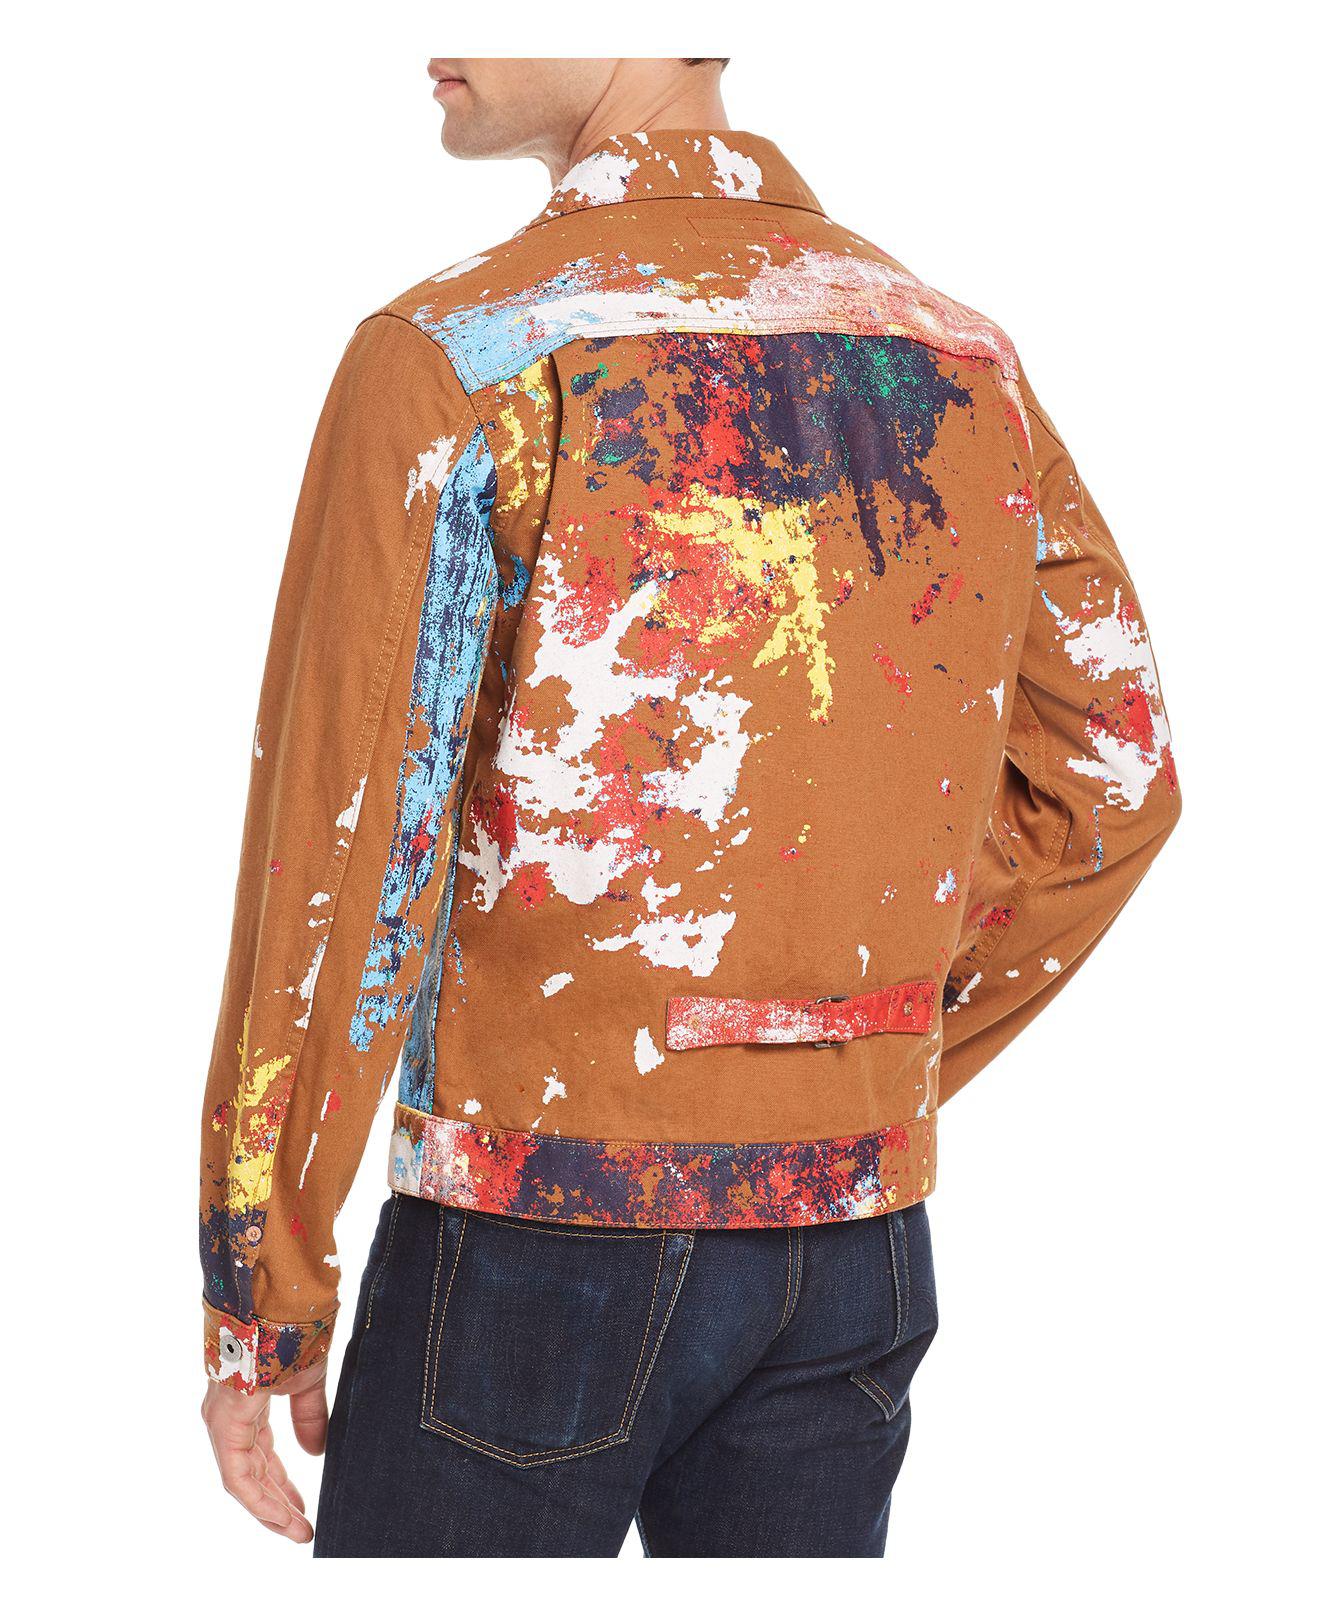 Junya Watanabe X Levi's Painted Trucker Jacket in Brown for Men - Lyst